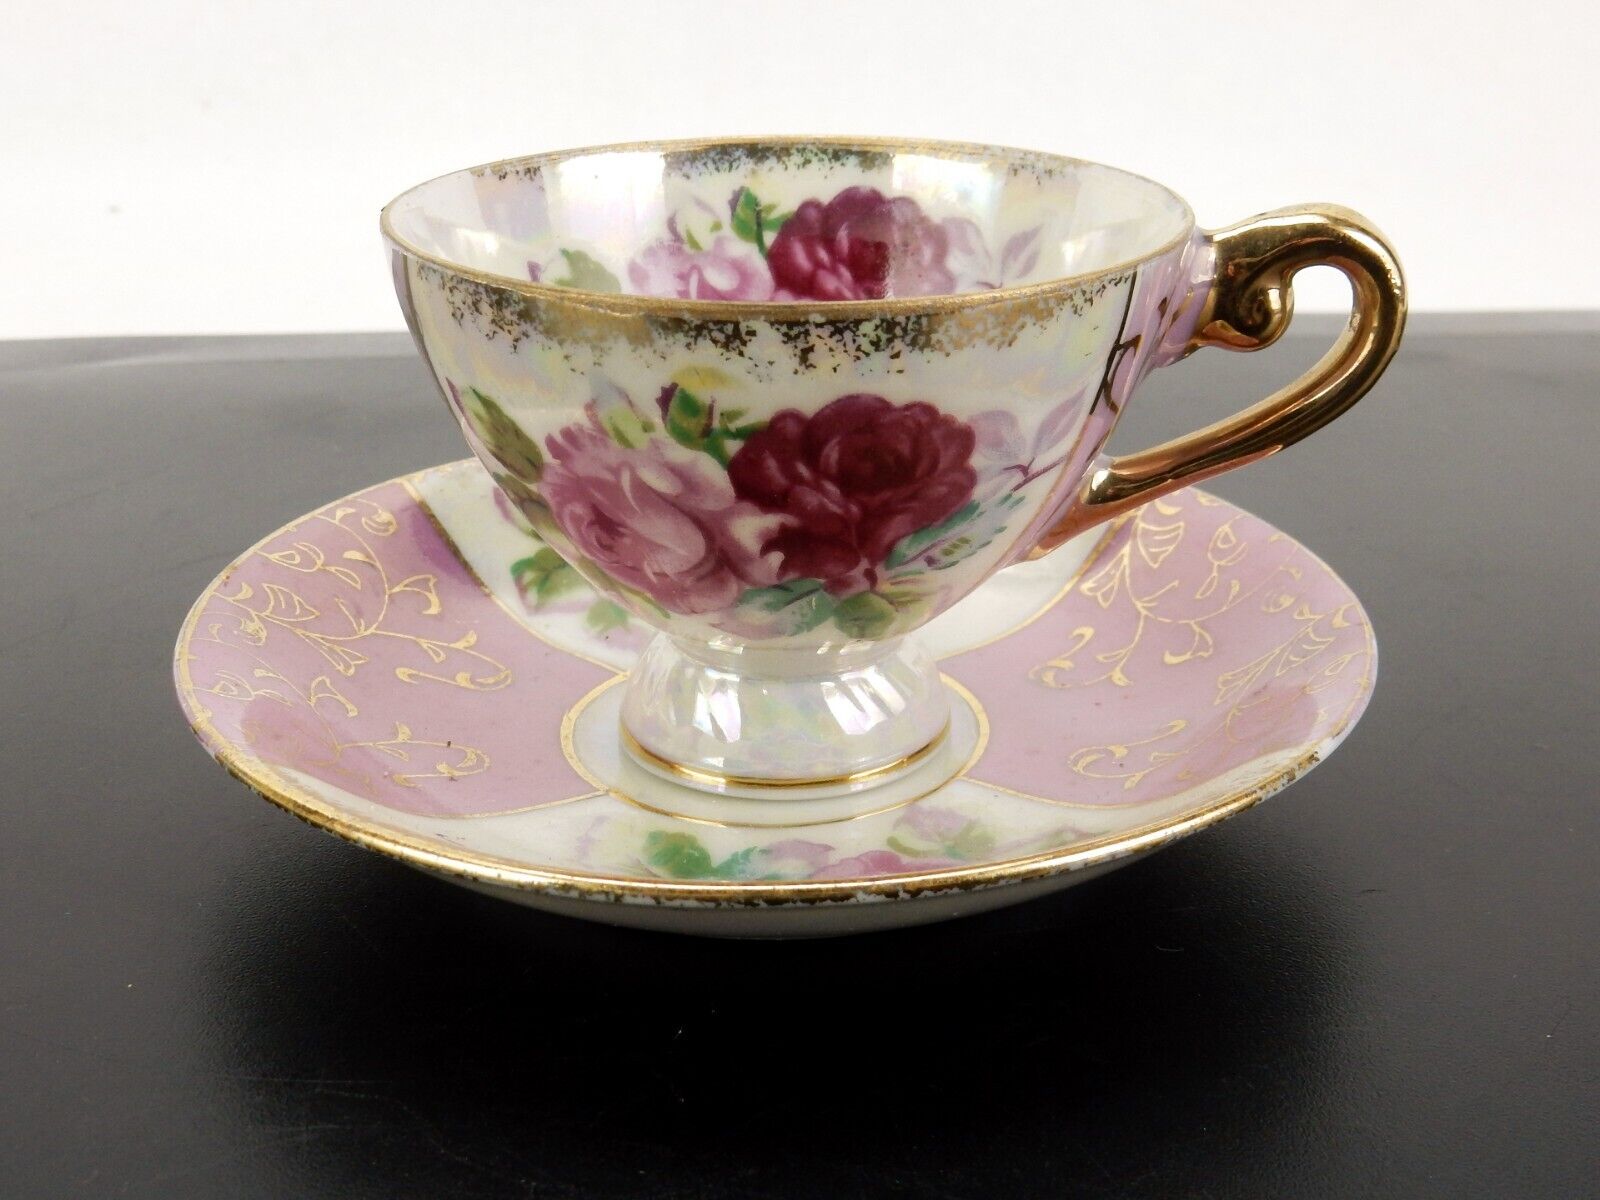 4 Panel Victorian China Teacup & Saucer, Pink & Red Rose Blooms, Gold Trim, 124n